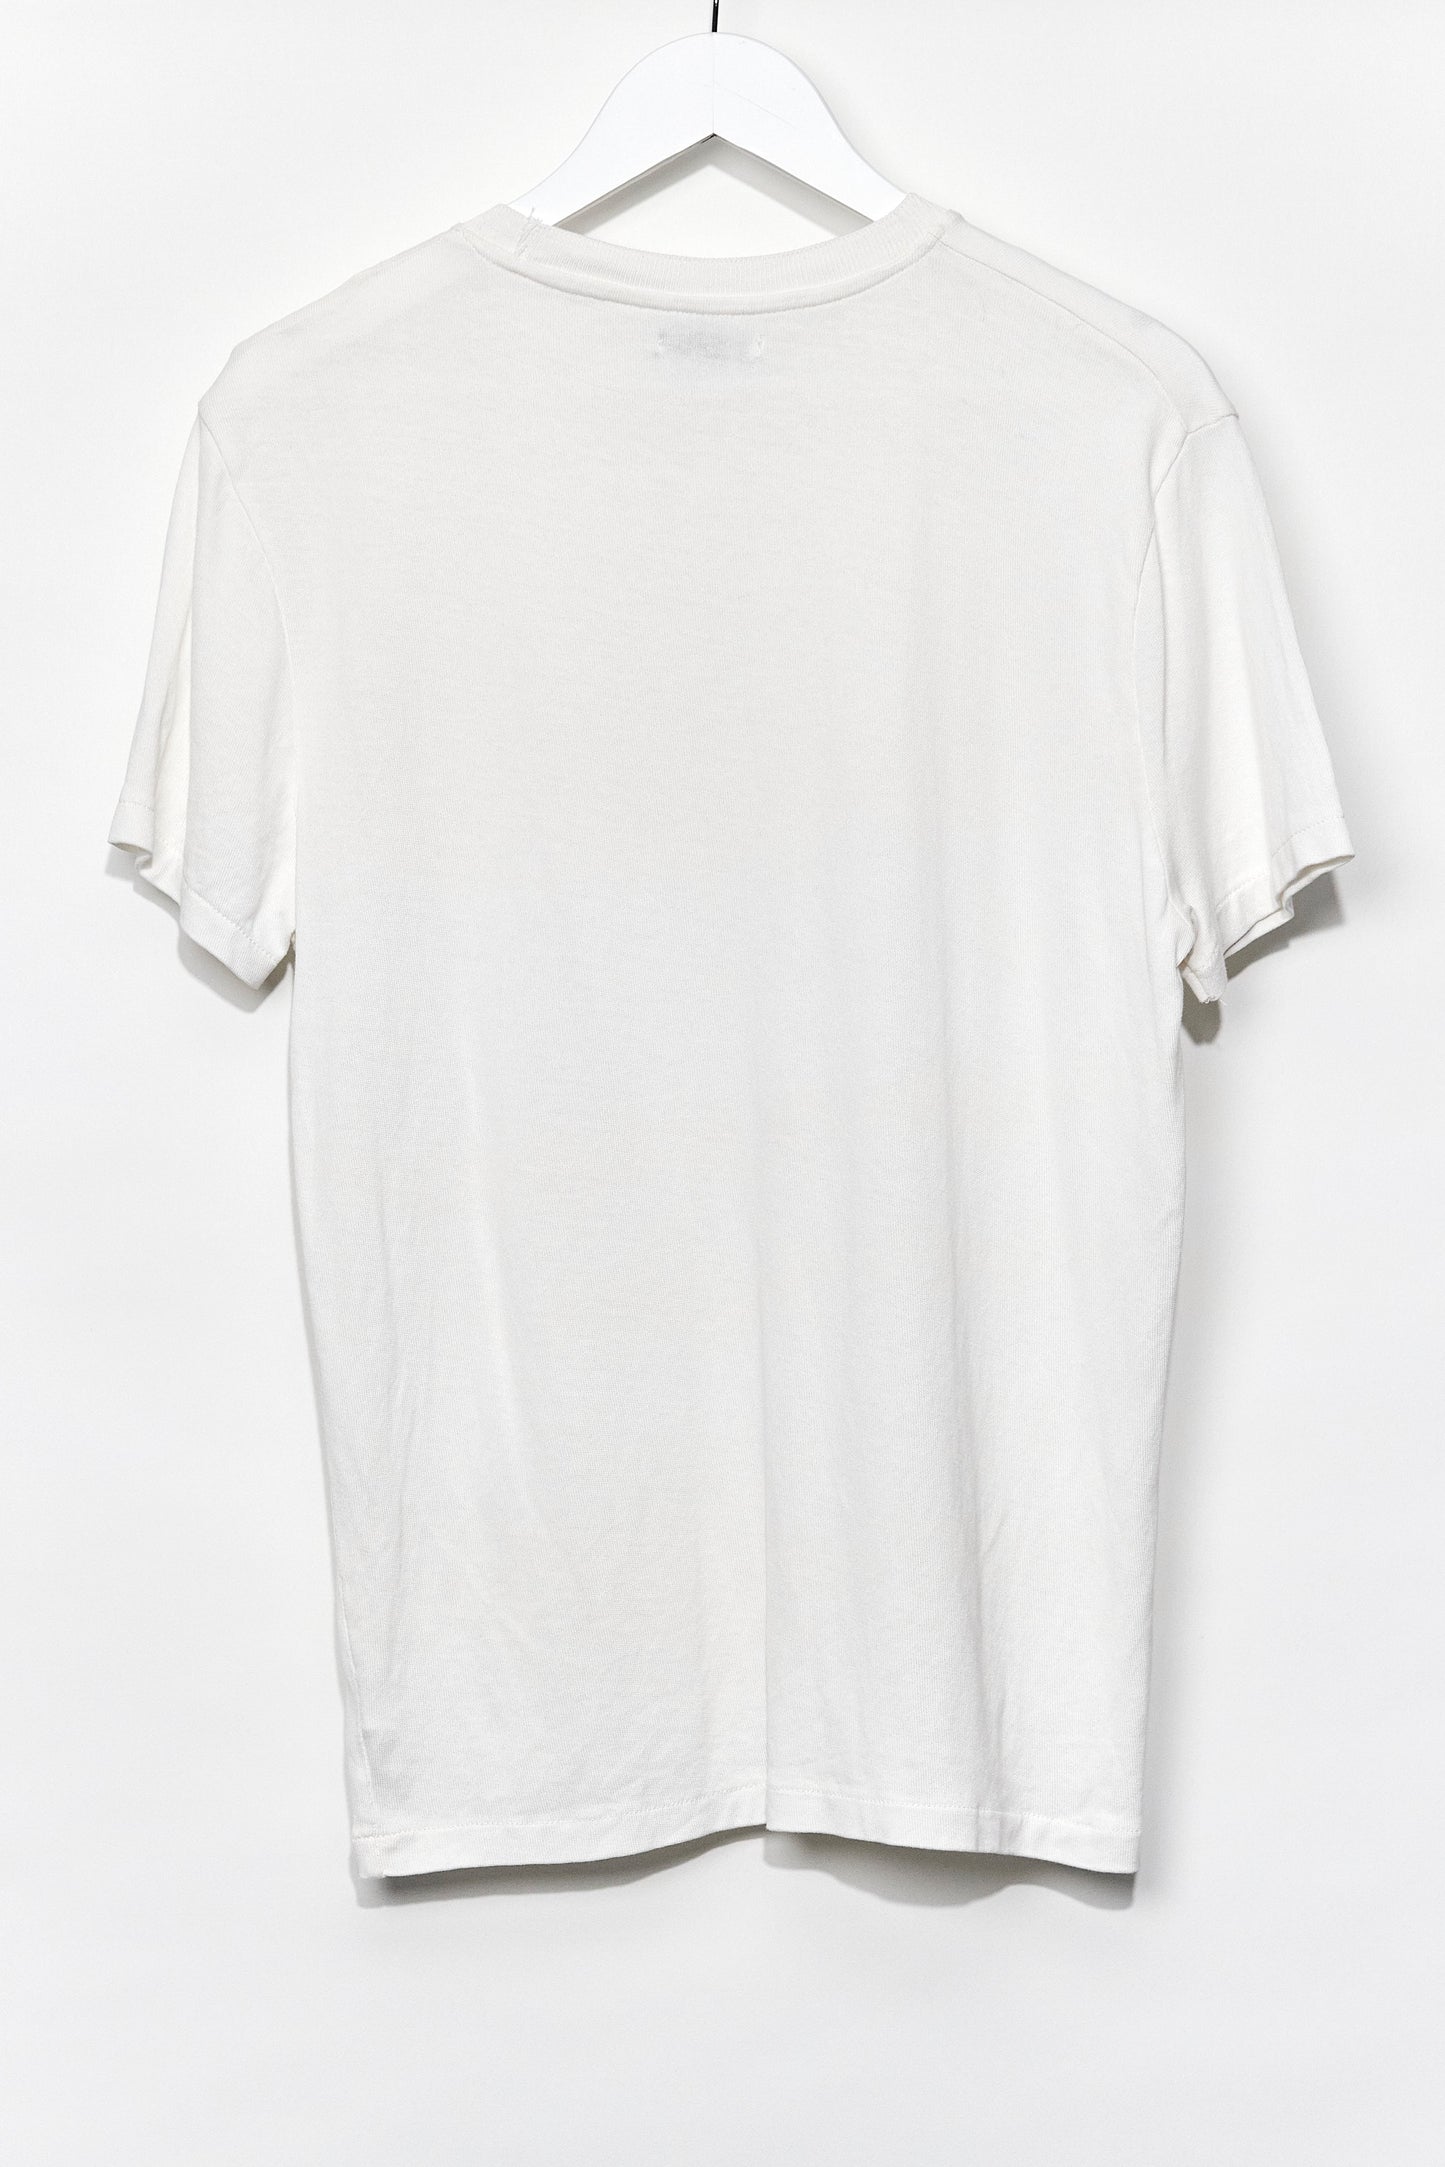 Mens Zara White Knitted T-shirt size Medium